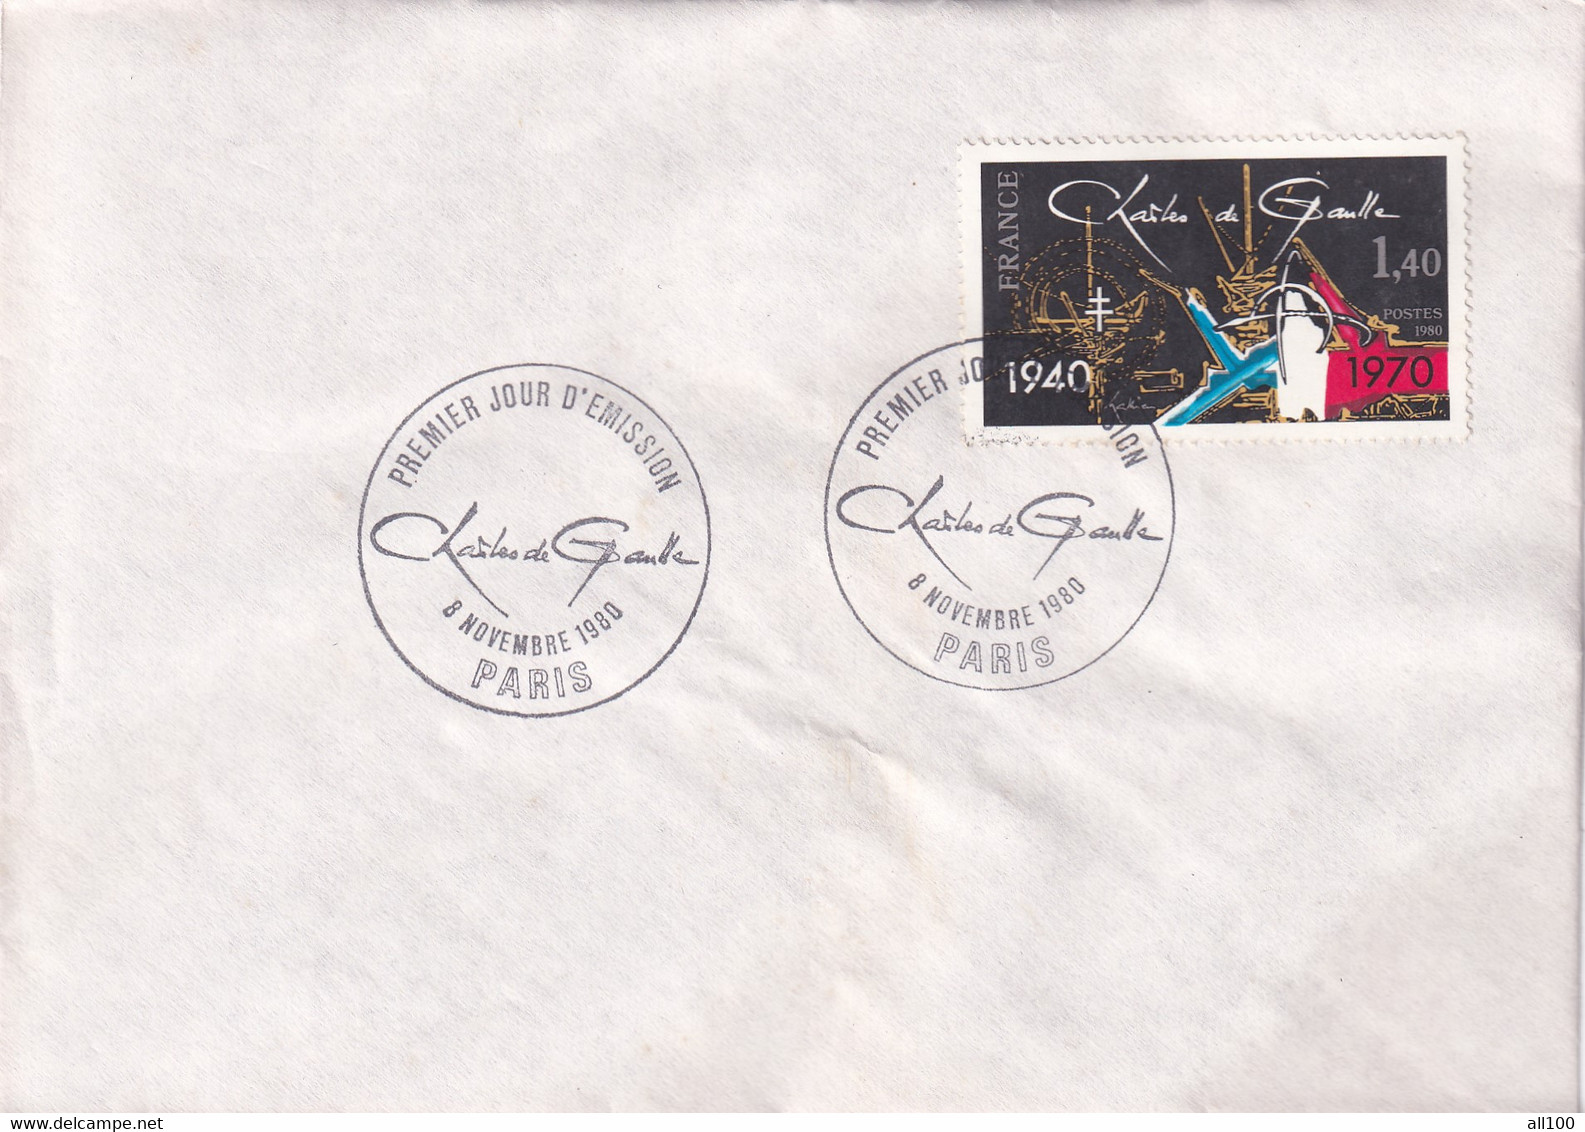 A21870 - Premier Jour D'Emission Charles De Gaulle Paris Cover Envelope Unused 1980 Stamp France - Storia Postale